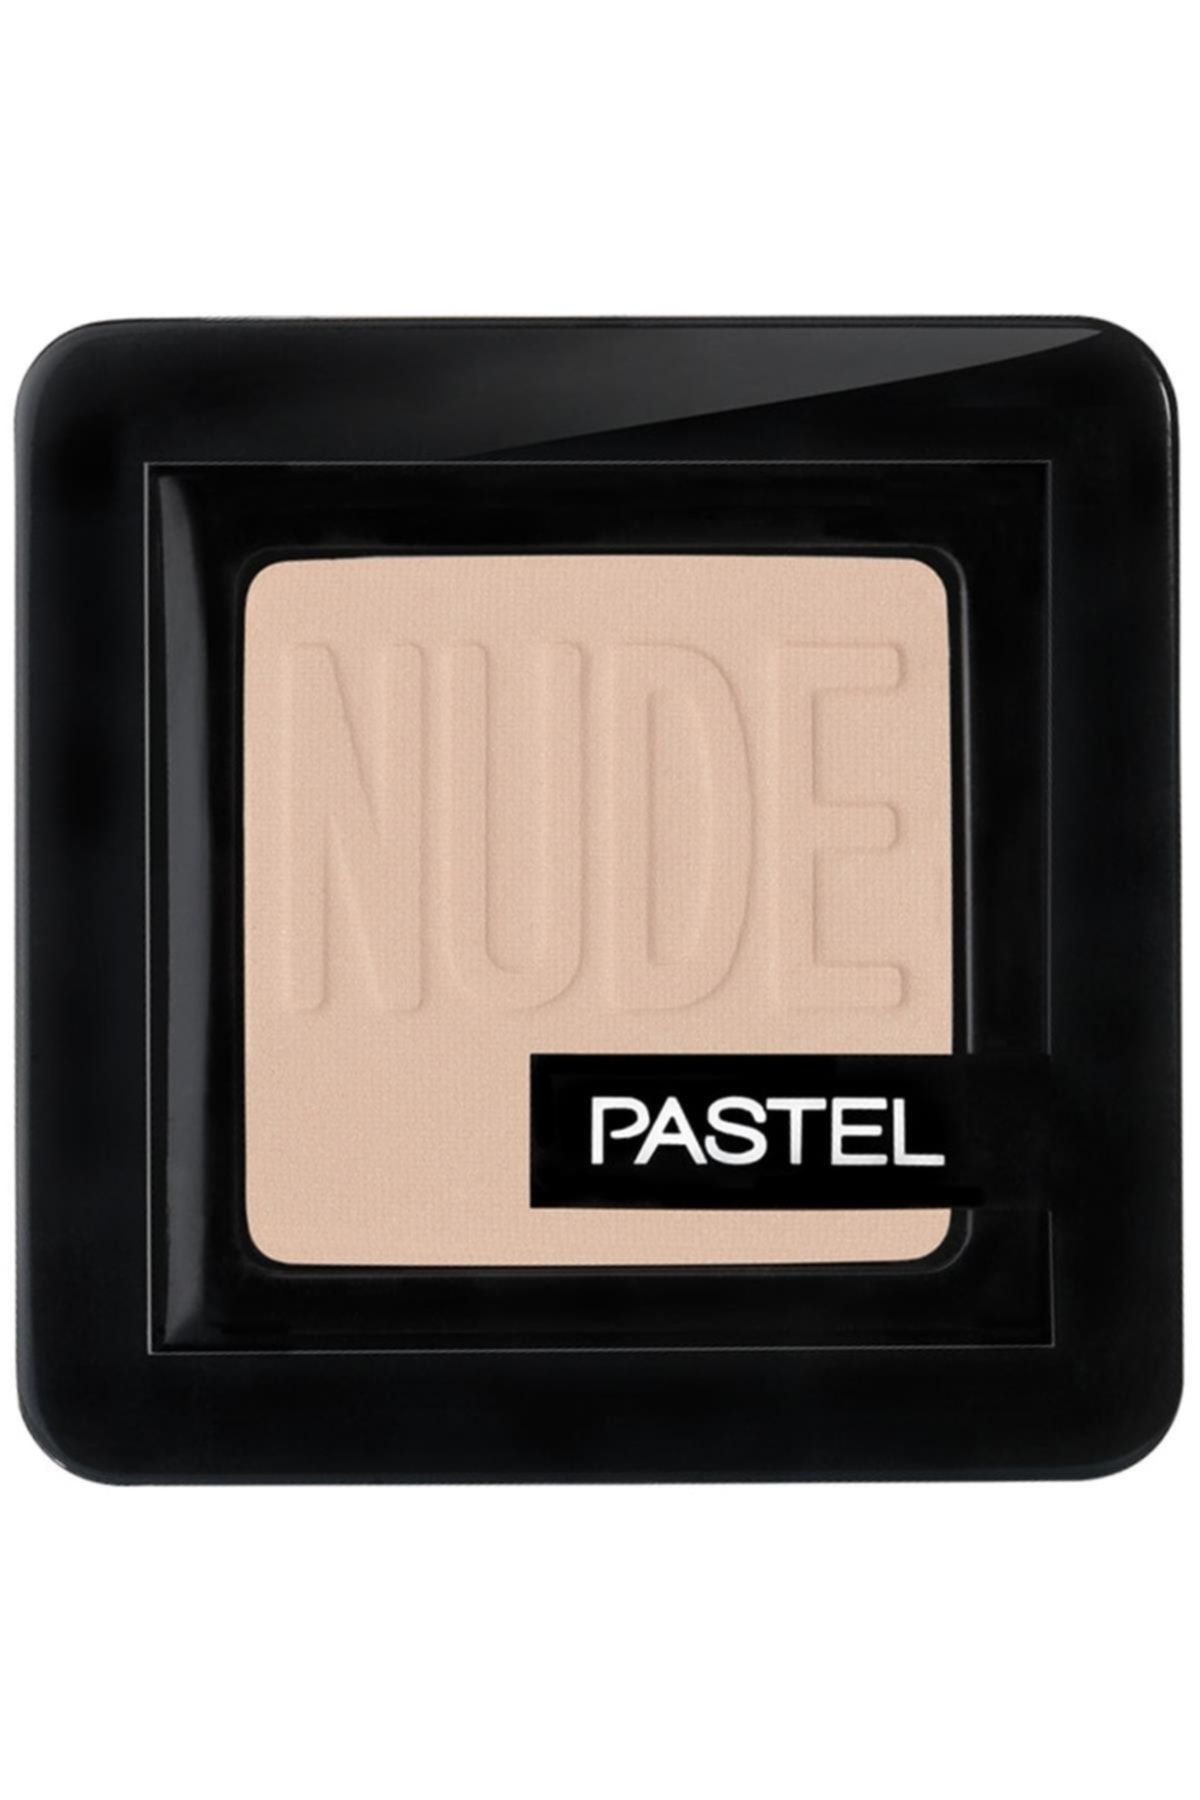 Pastel Marka: Profashion Nude Single Eyeshadow 71 Skin Kategori: Kaş Kalemi&kaş Farı